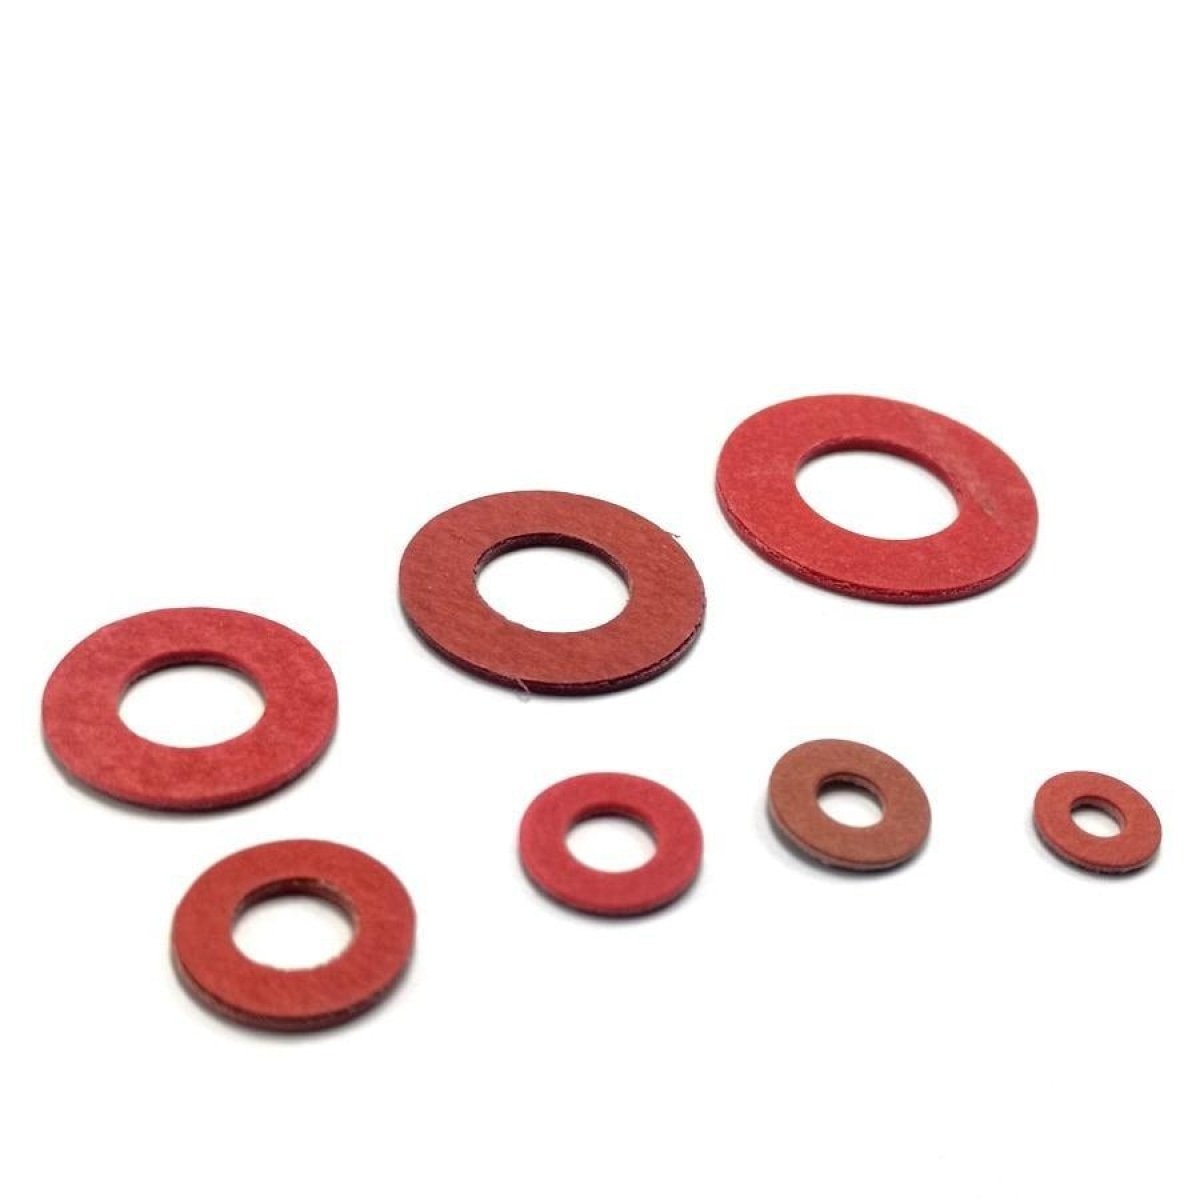 M3-M12 Red Fiber Washer Kit 230Pcs Insulation Gasket Set Fibre Washers